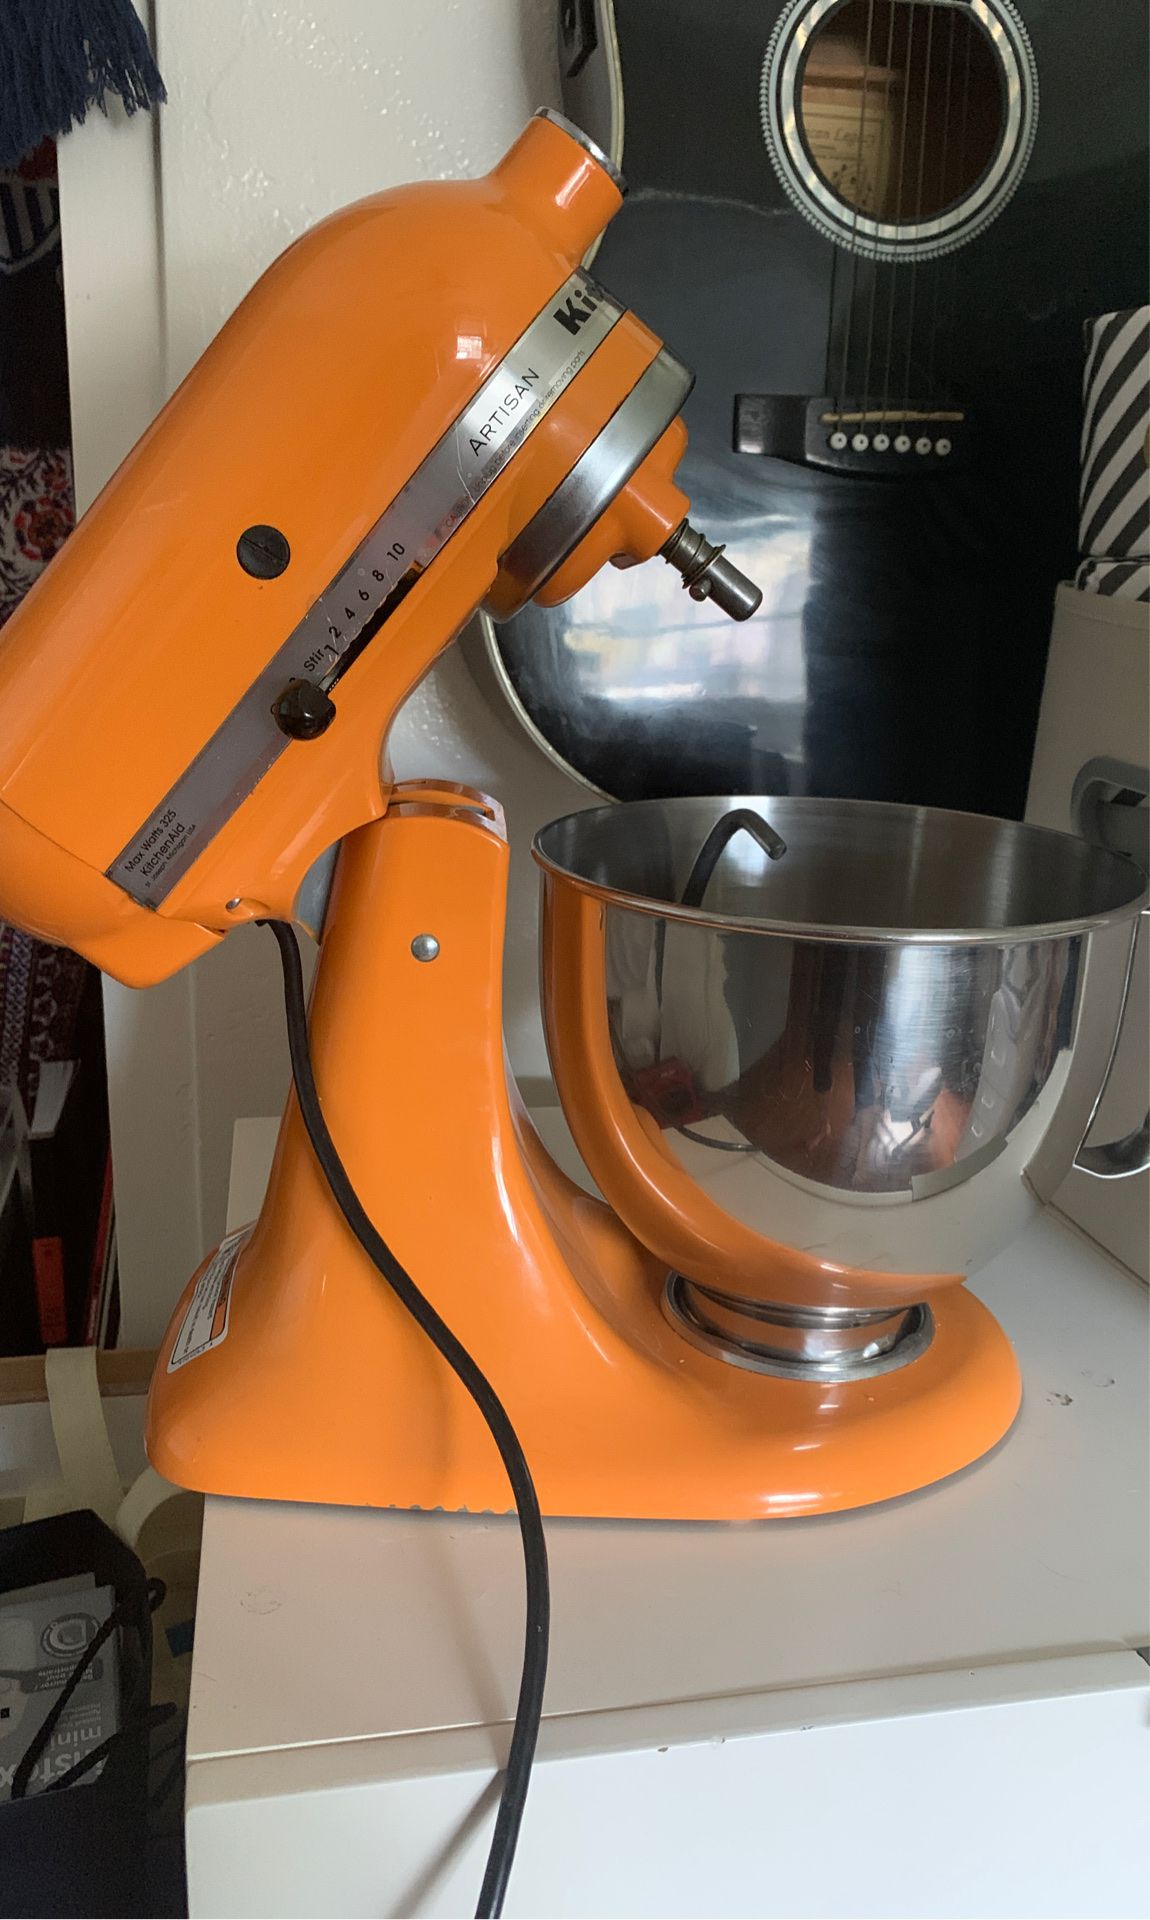 KitchenAid 5qt Artisan mixer in Tangerine